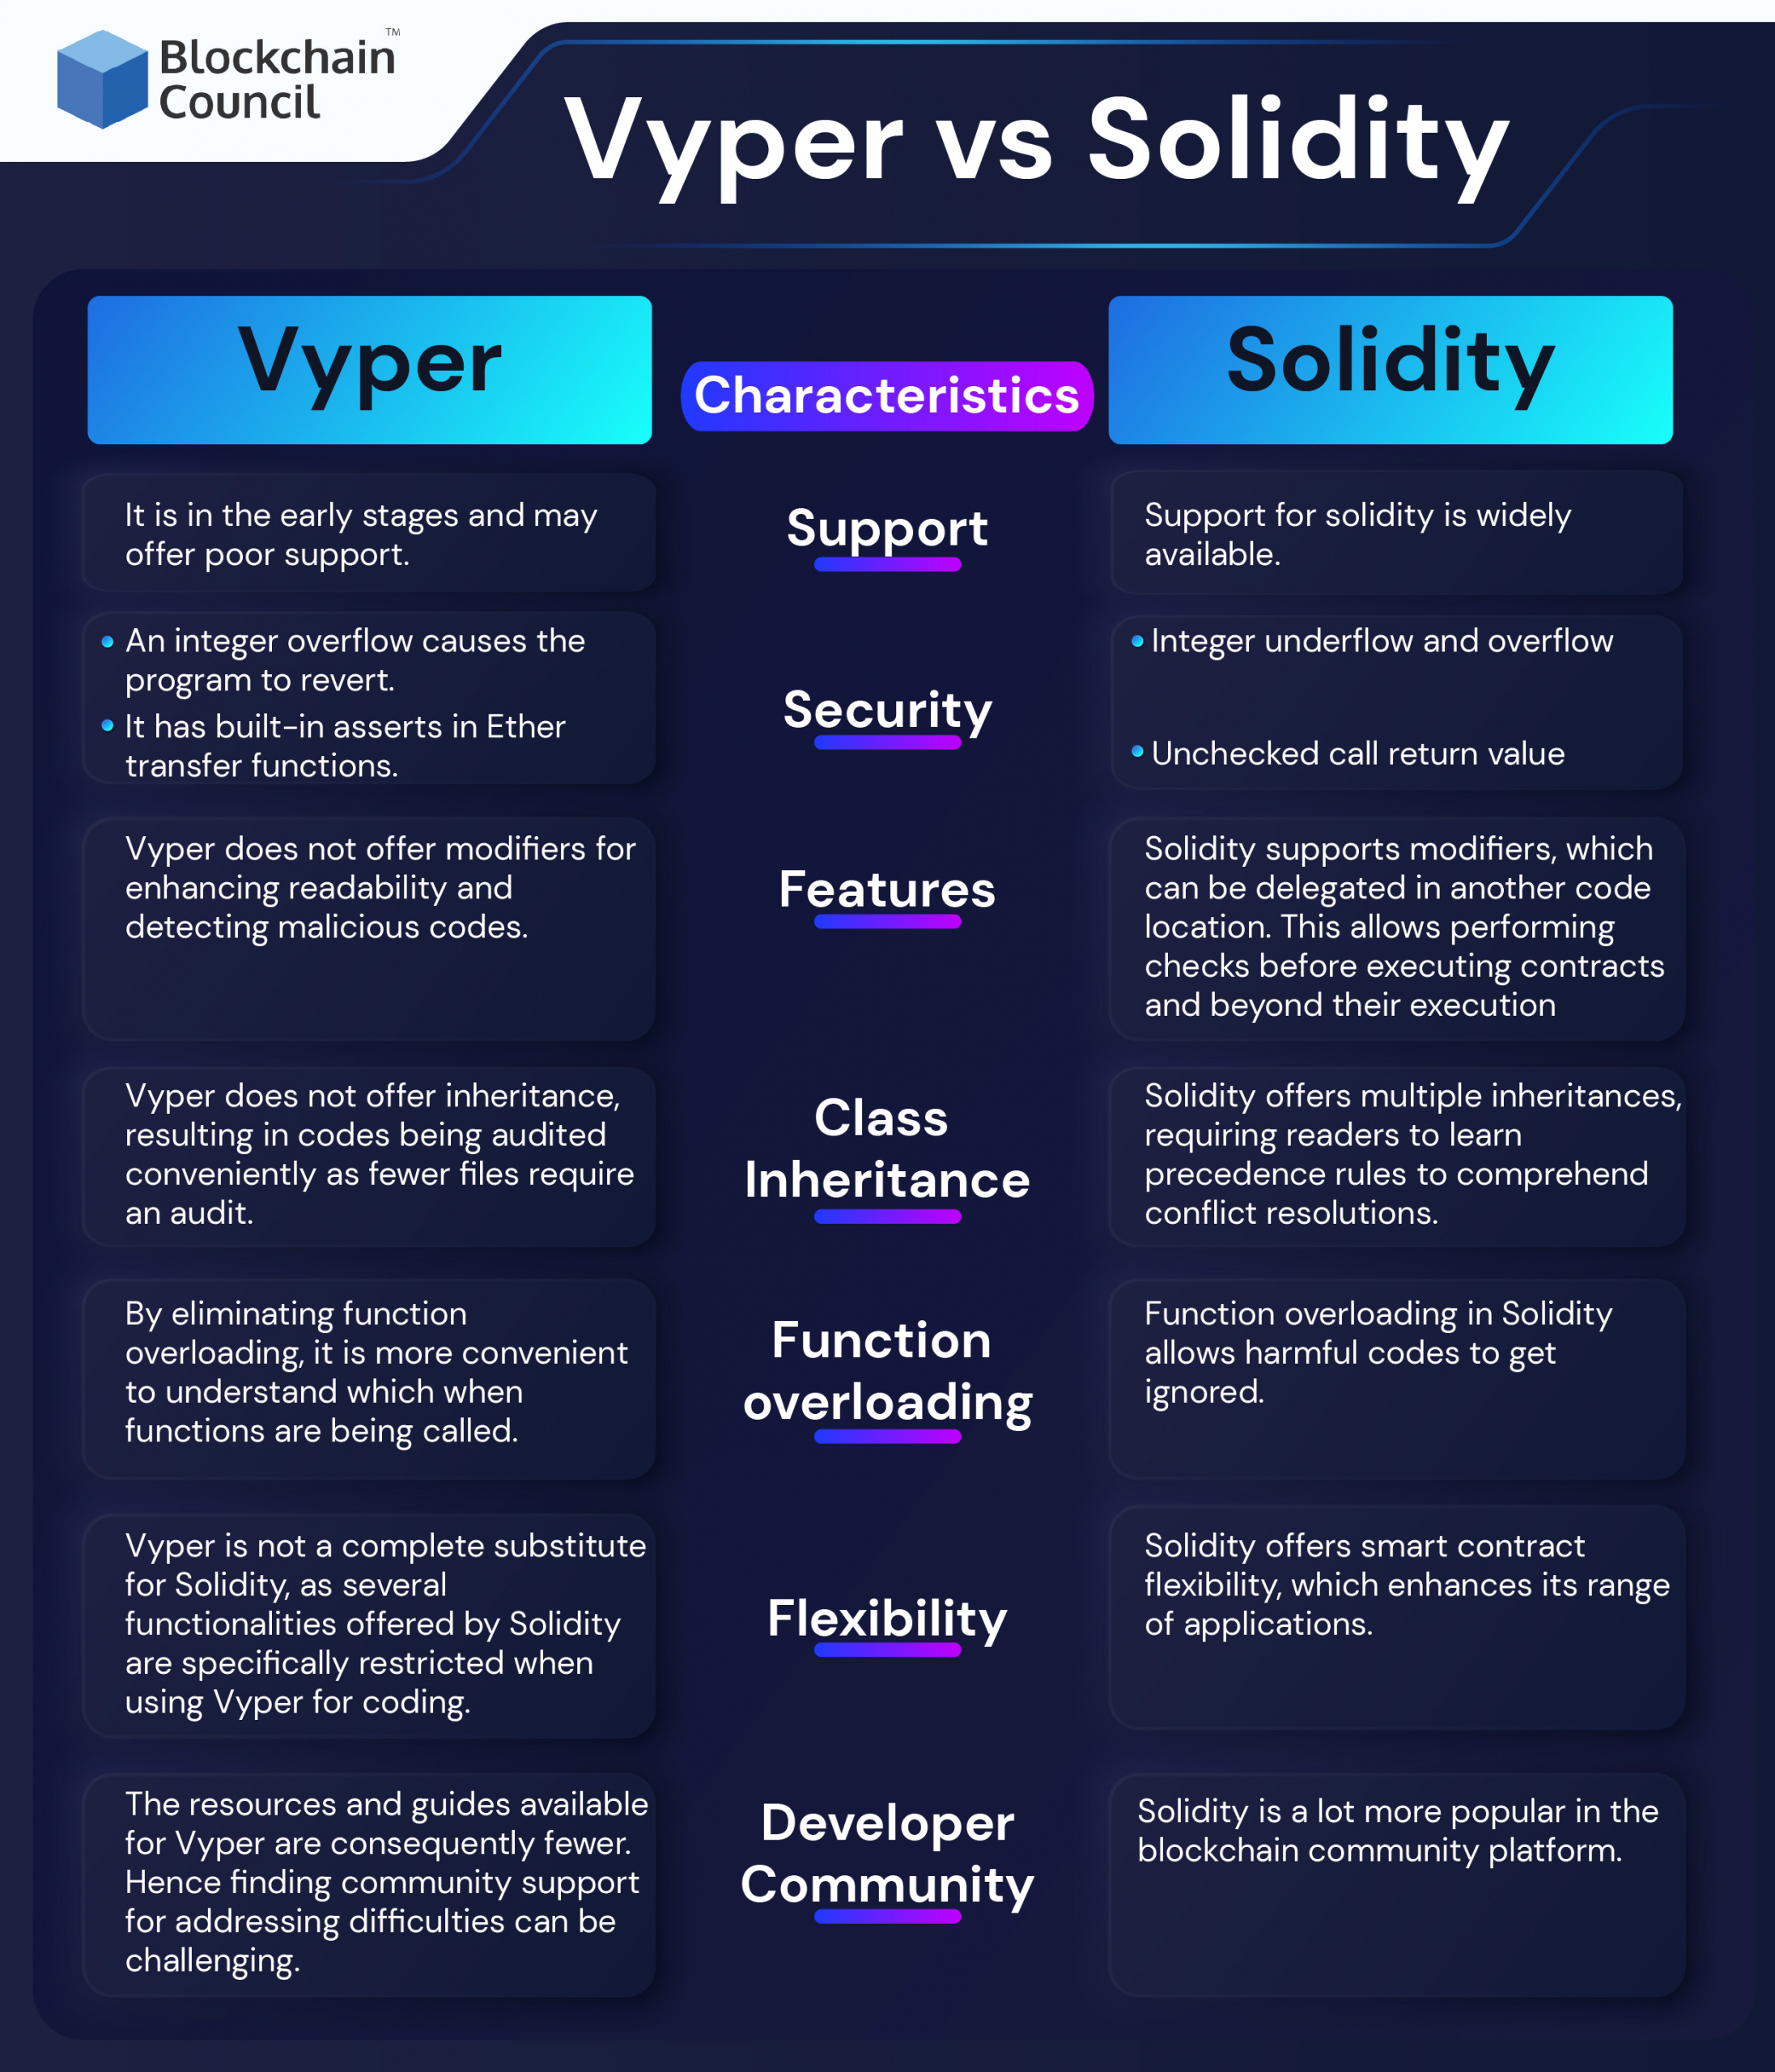 Solidity vs Vyper